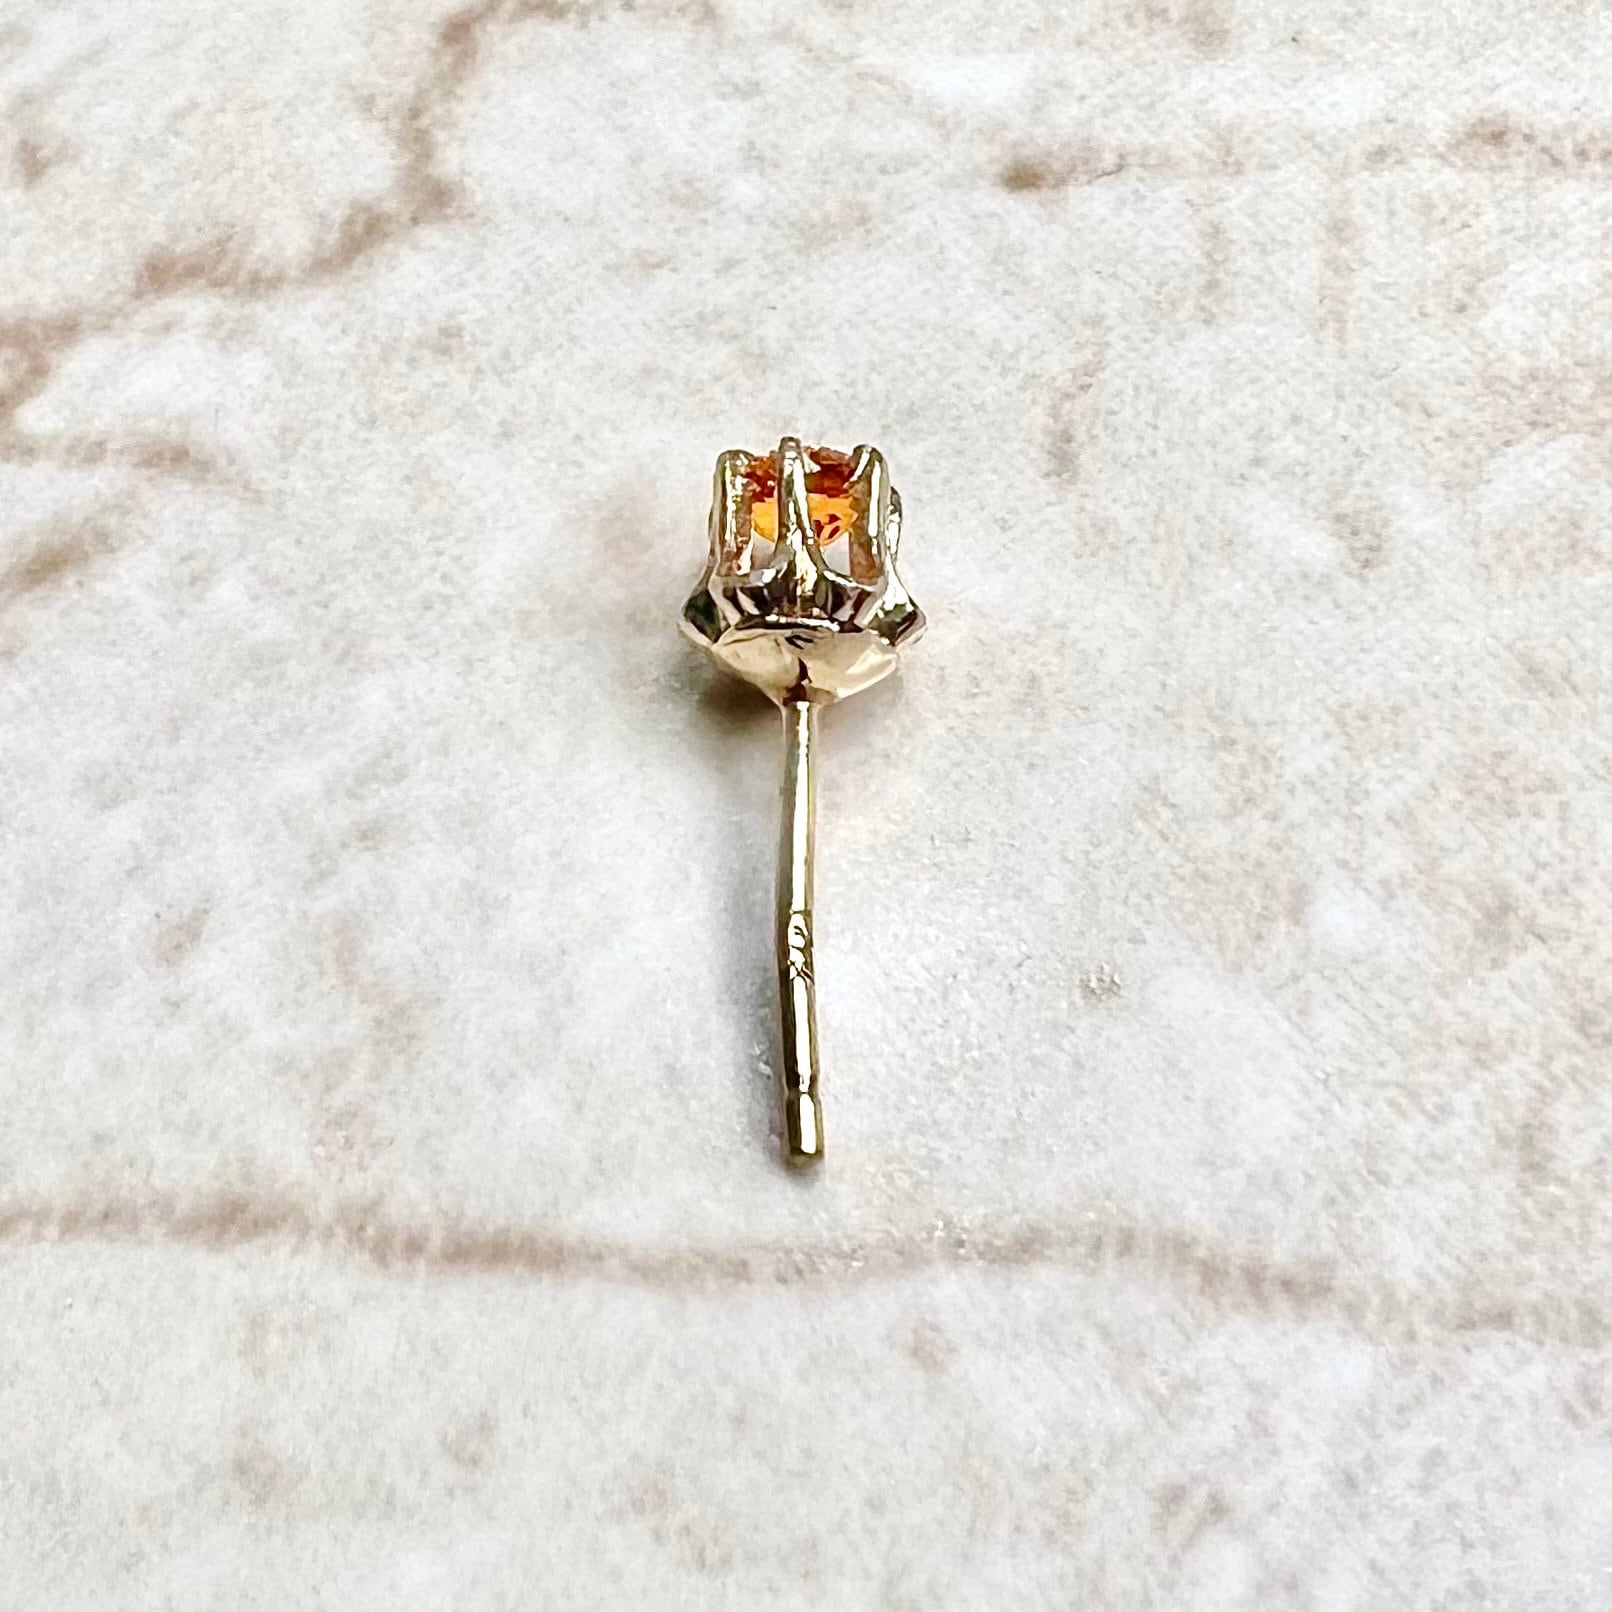 Antique Single 14K Orange Glass Stud Earring - 14K Yellow Gold Stud - Gemstone Stud - Single Earring - Gemstone Earring - Best Gifts For Her